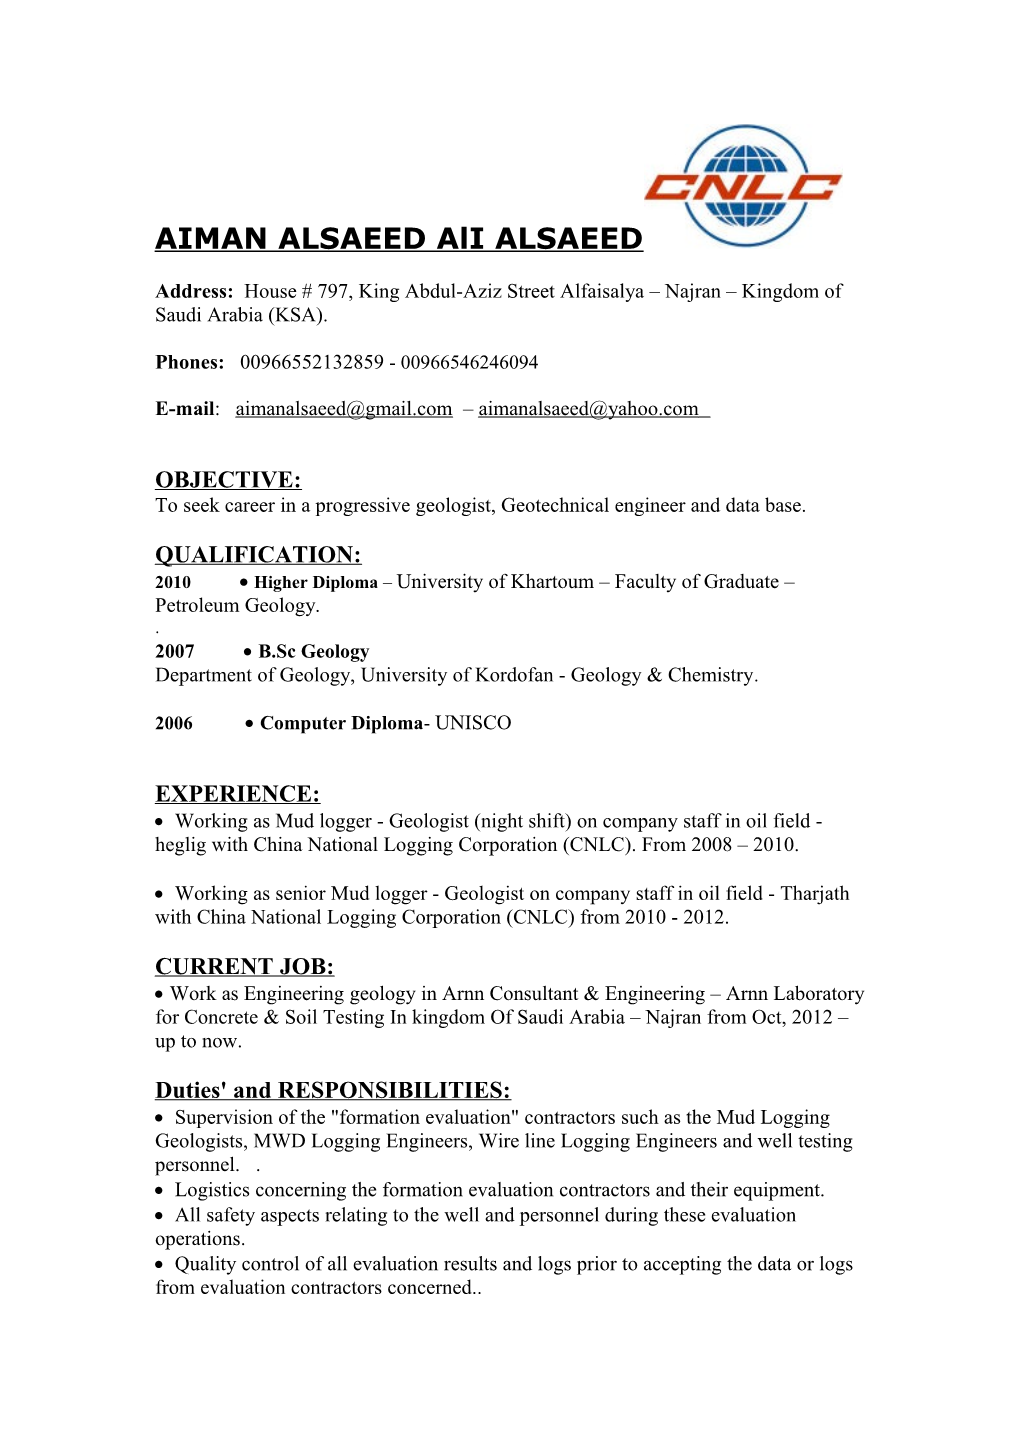 AIMAN ALSAEED Ali ALSAEED